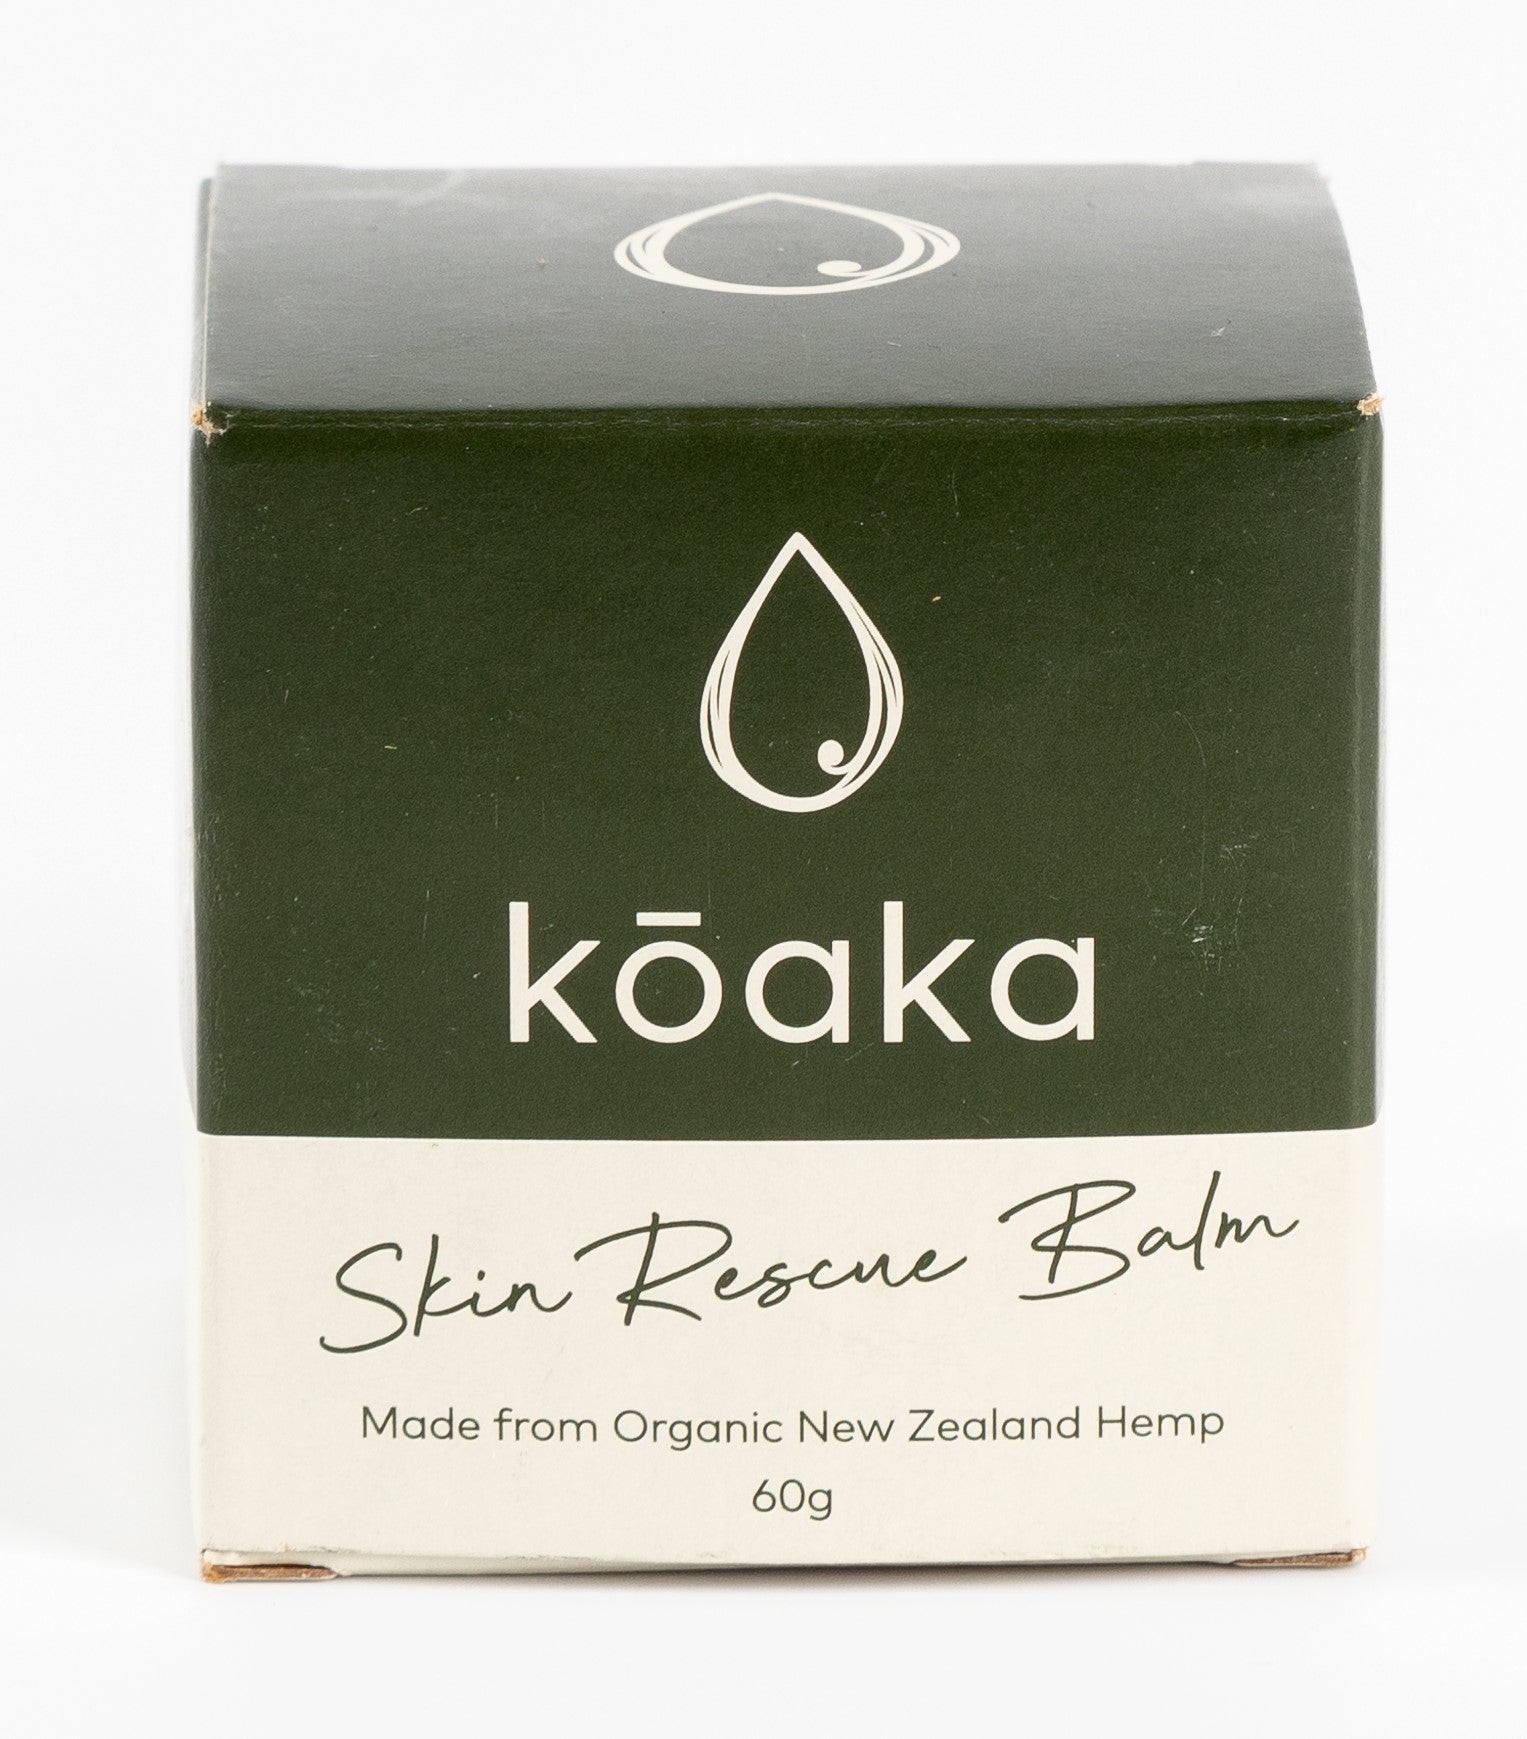 Koaka Skin Rescue Balm 60g